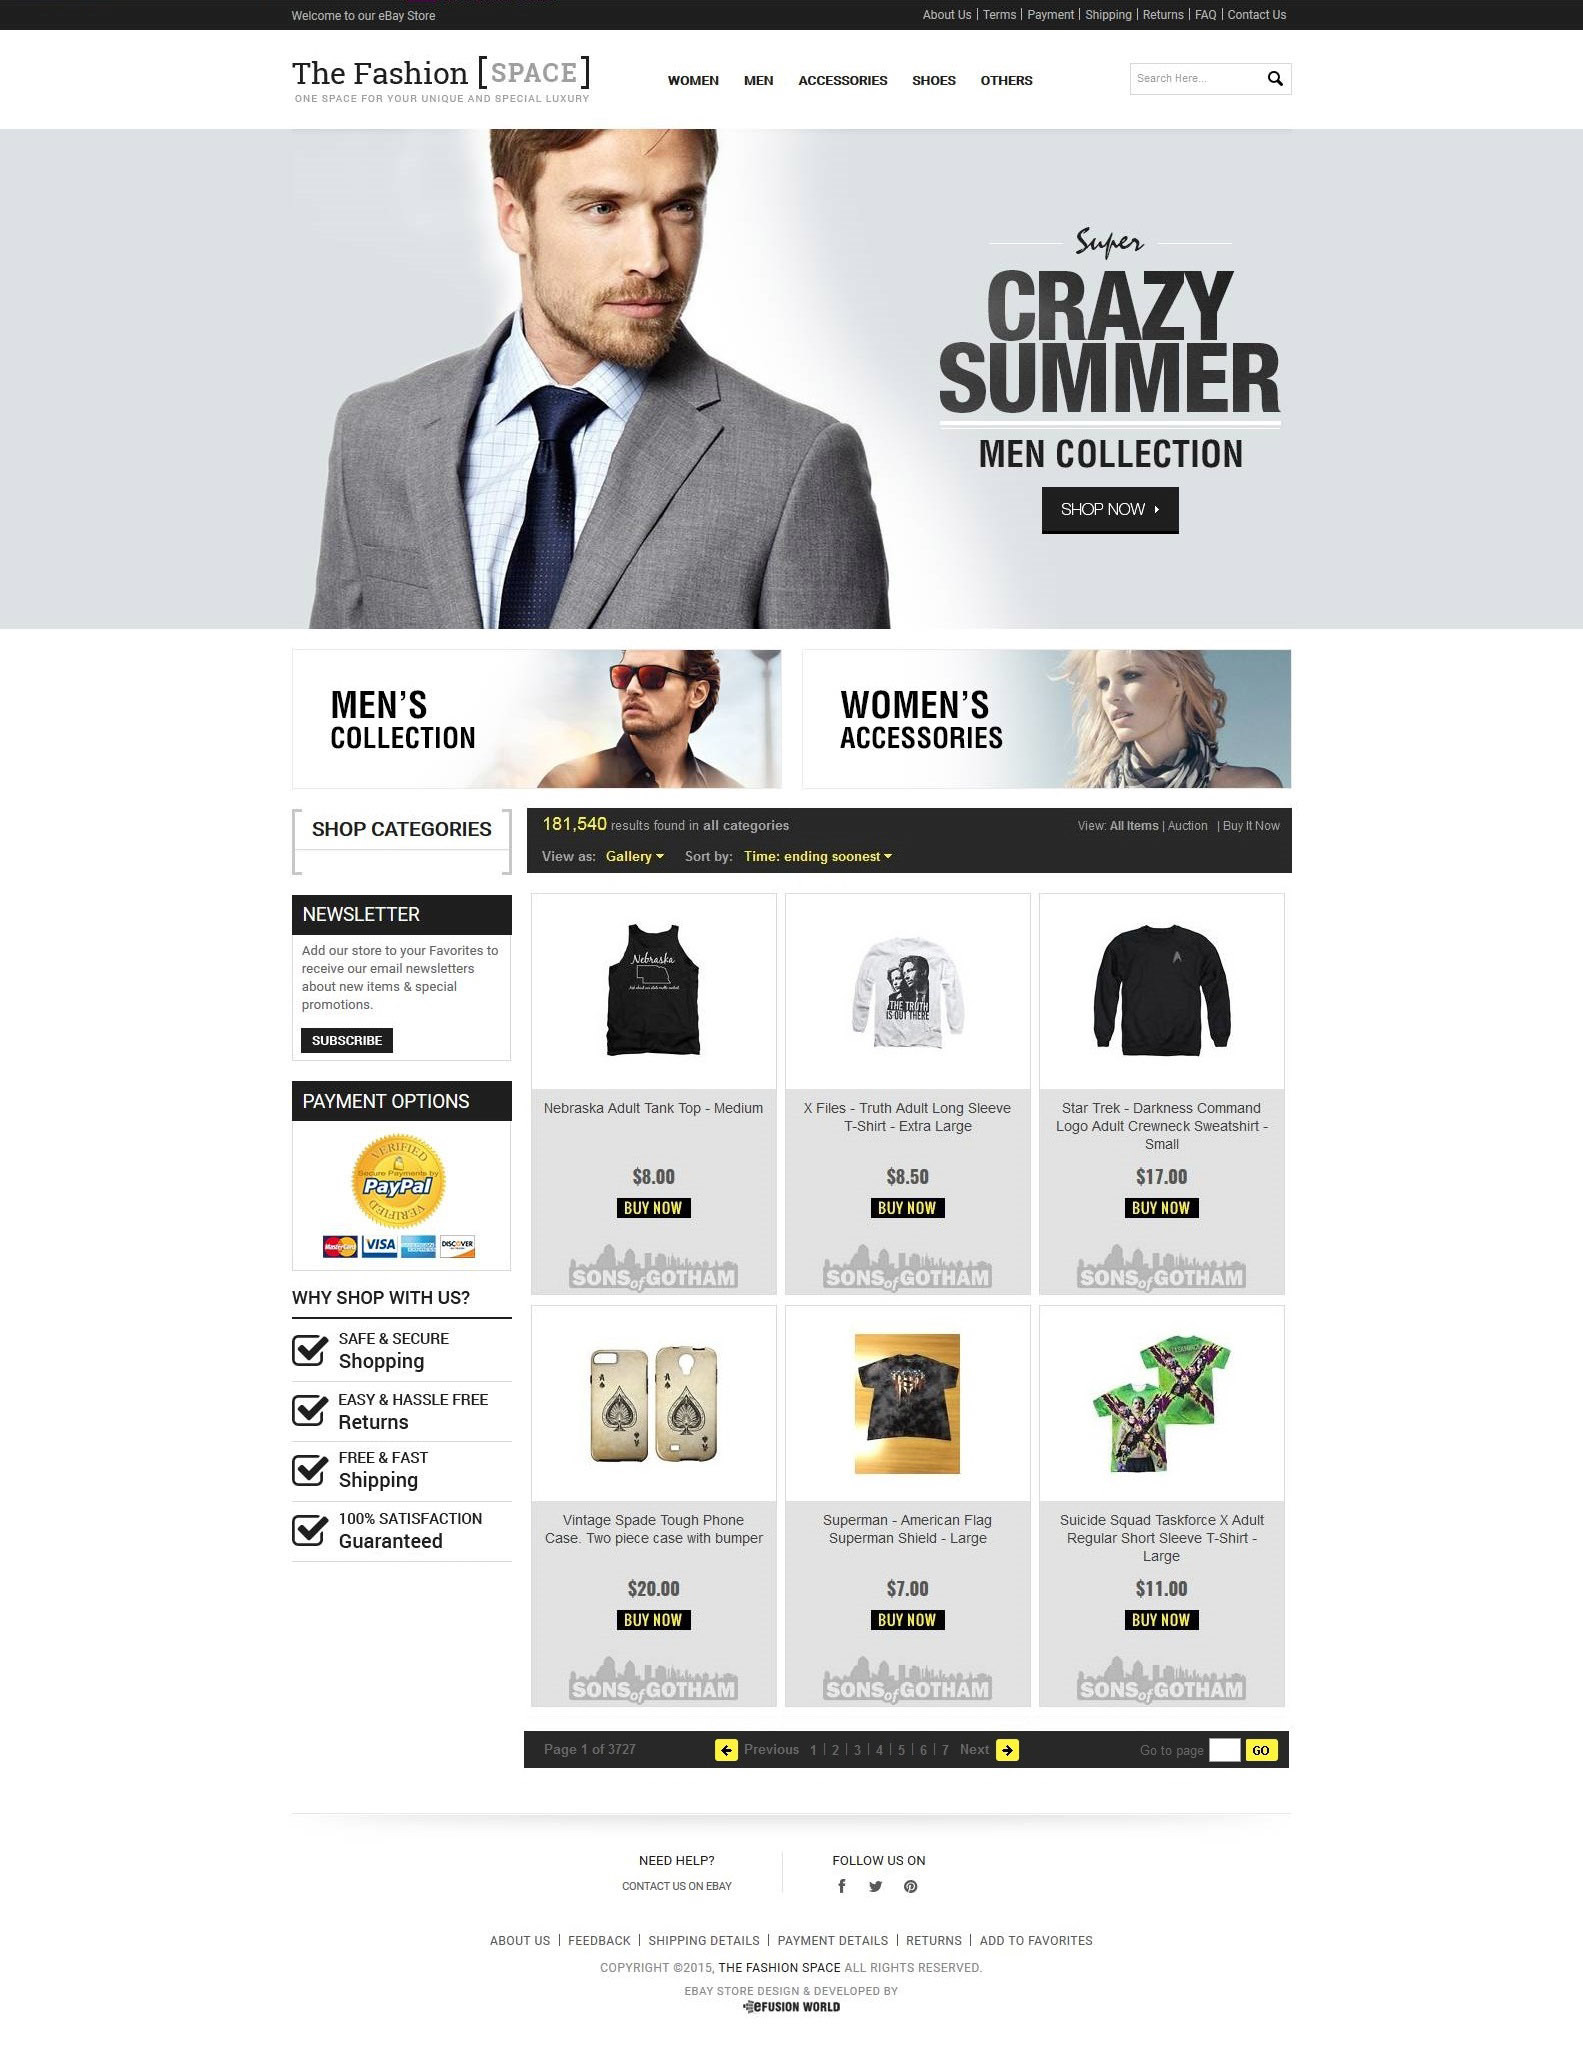 Custom Bigcommerce Website Design Services